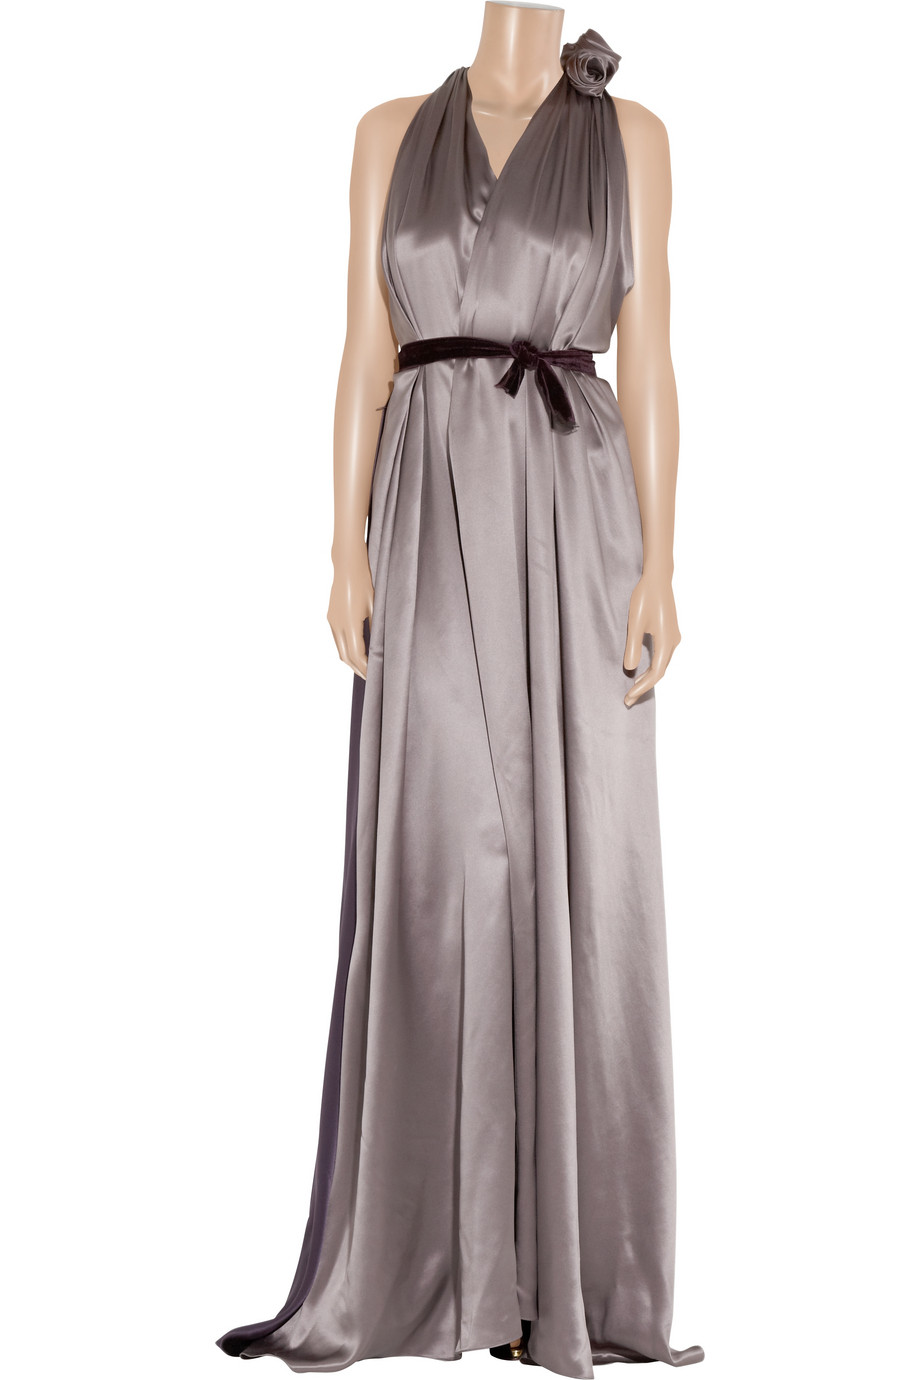 ROKSANDA Two-tone Silk-satin Gown in Lavender (Purple) - Lyst